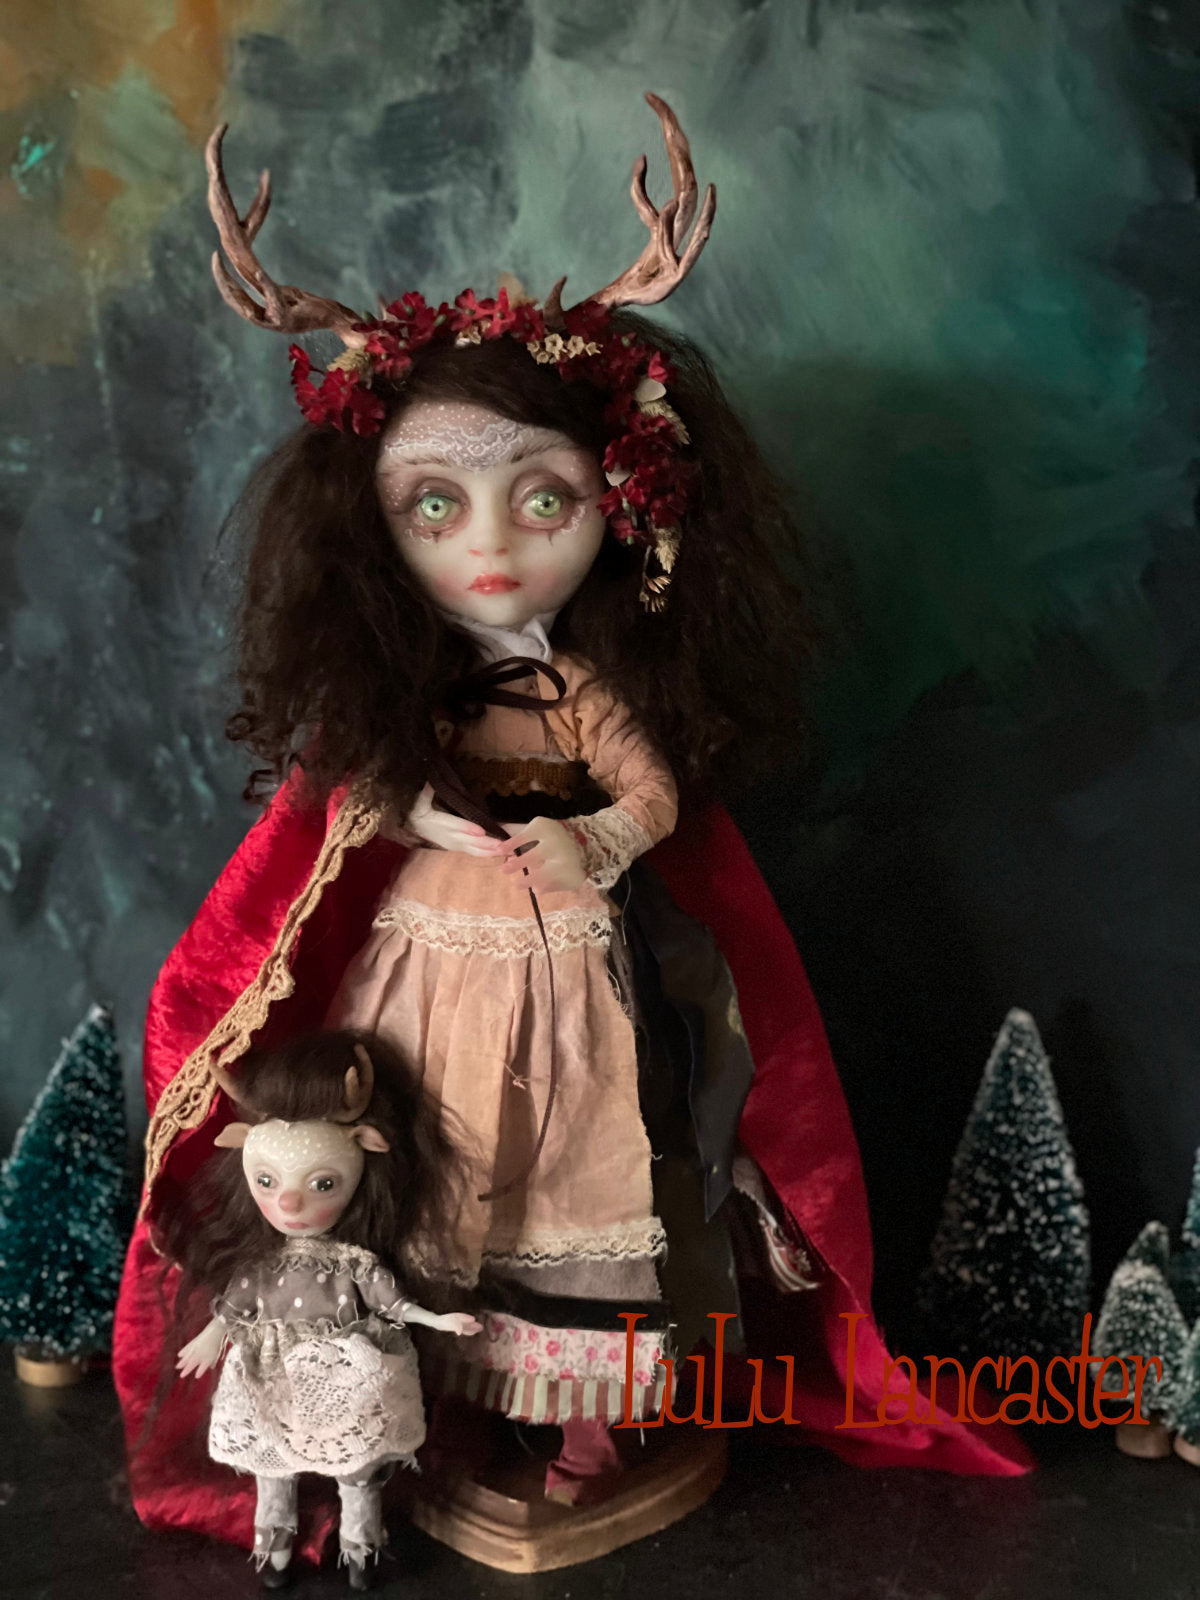 Dariel the Deer Original LuLu Lancaster Art Doll